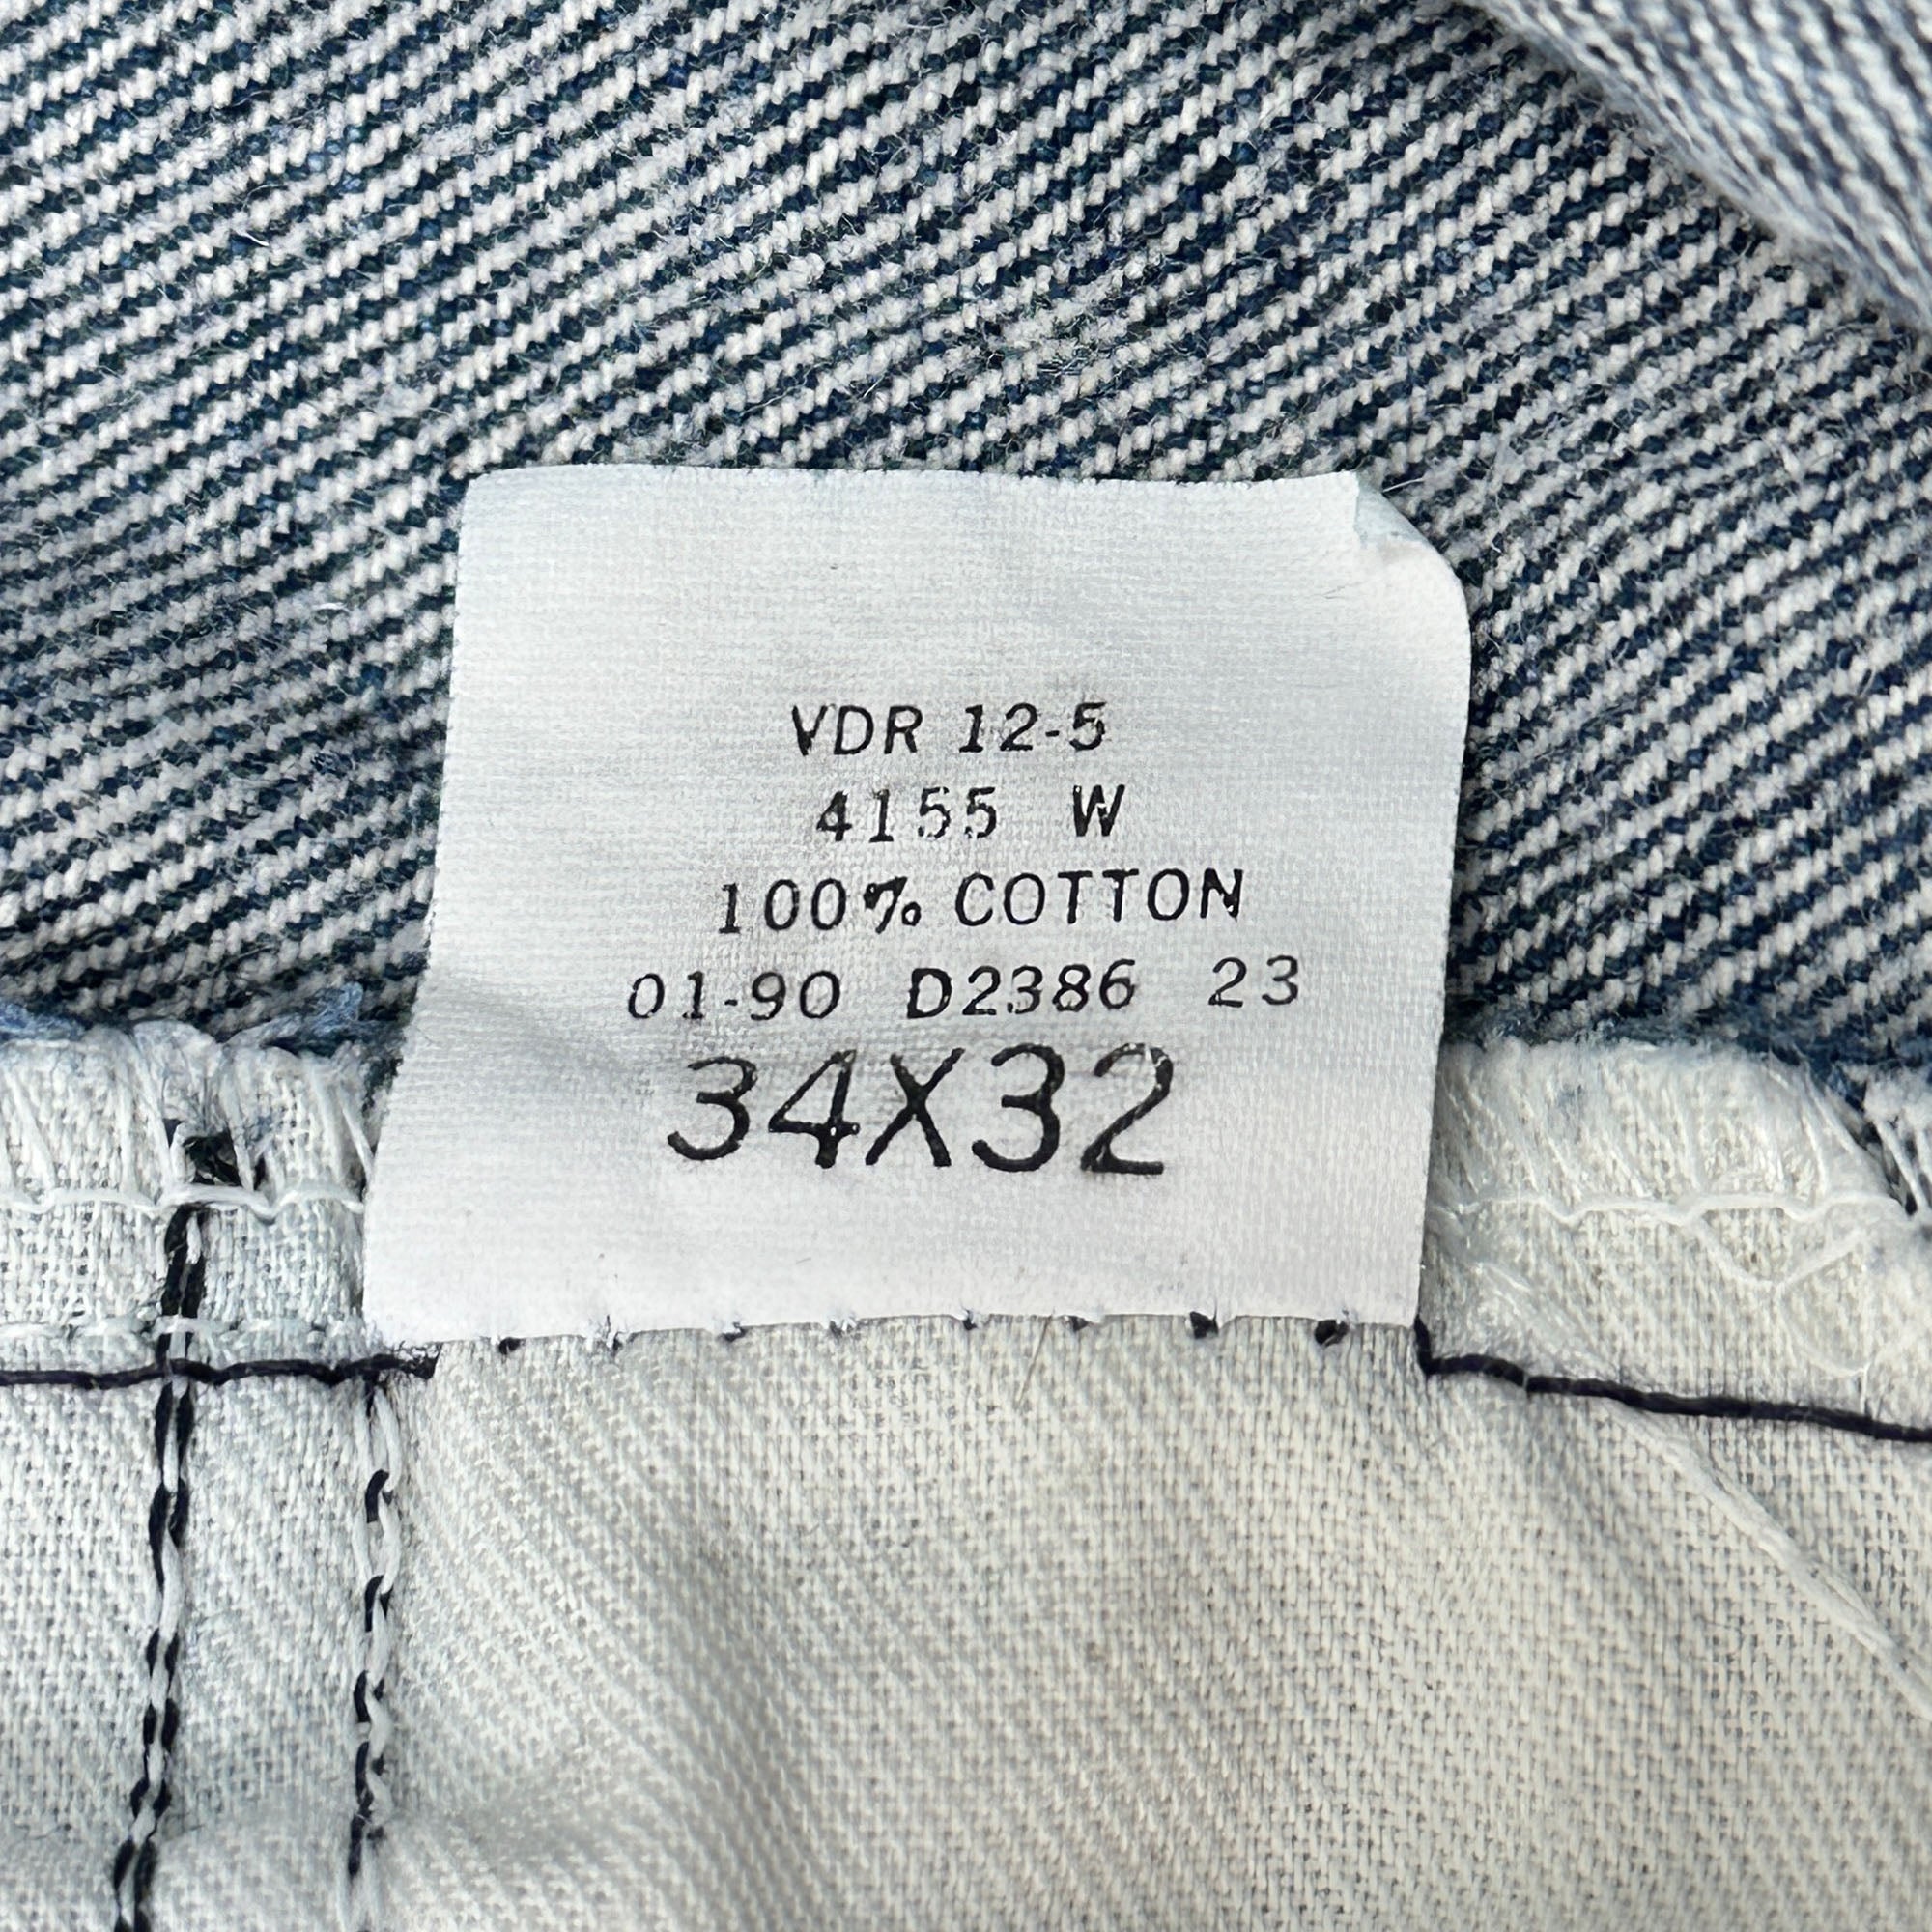 Vintage 1990 Acid Washed Arizona Jeans Tapered Fit USA - Measures 31x31-5